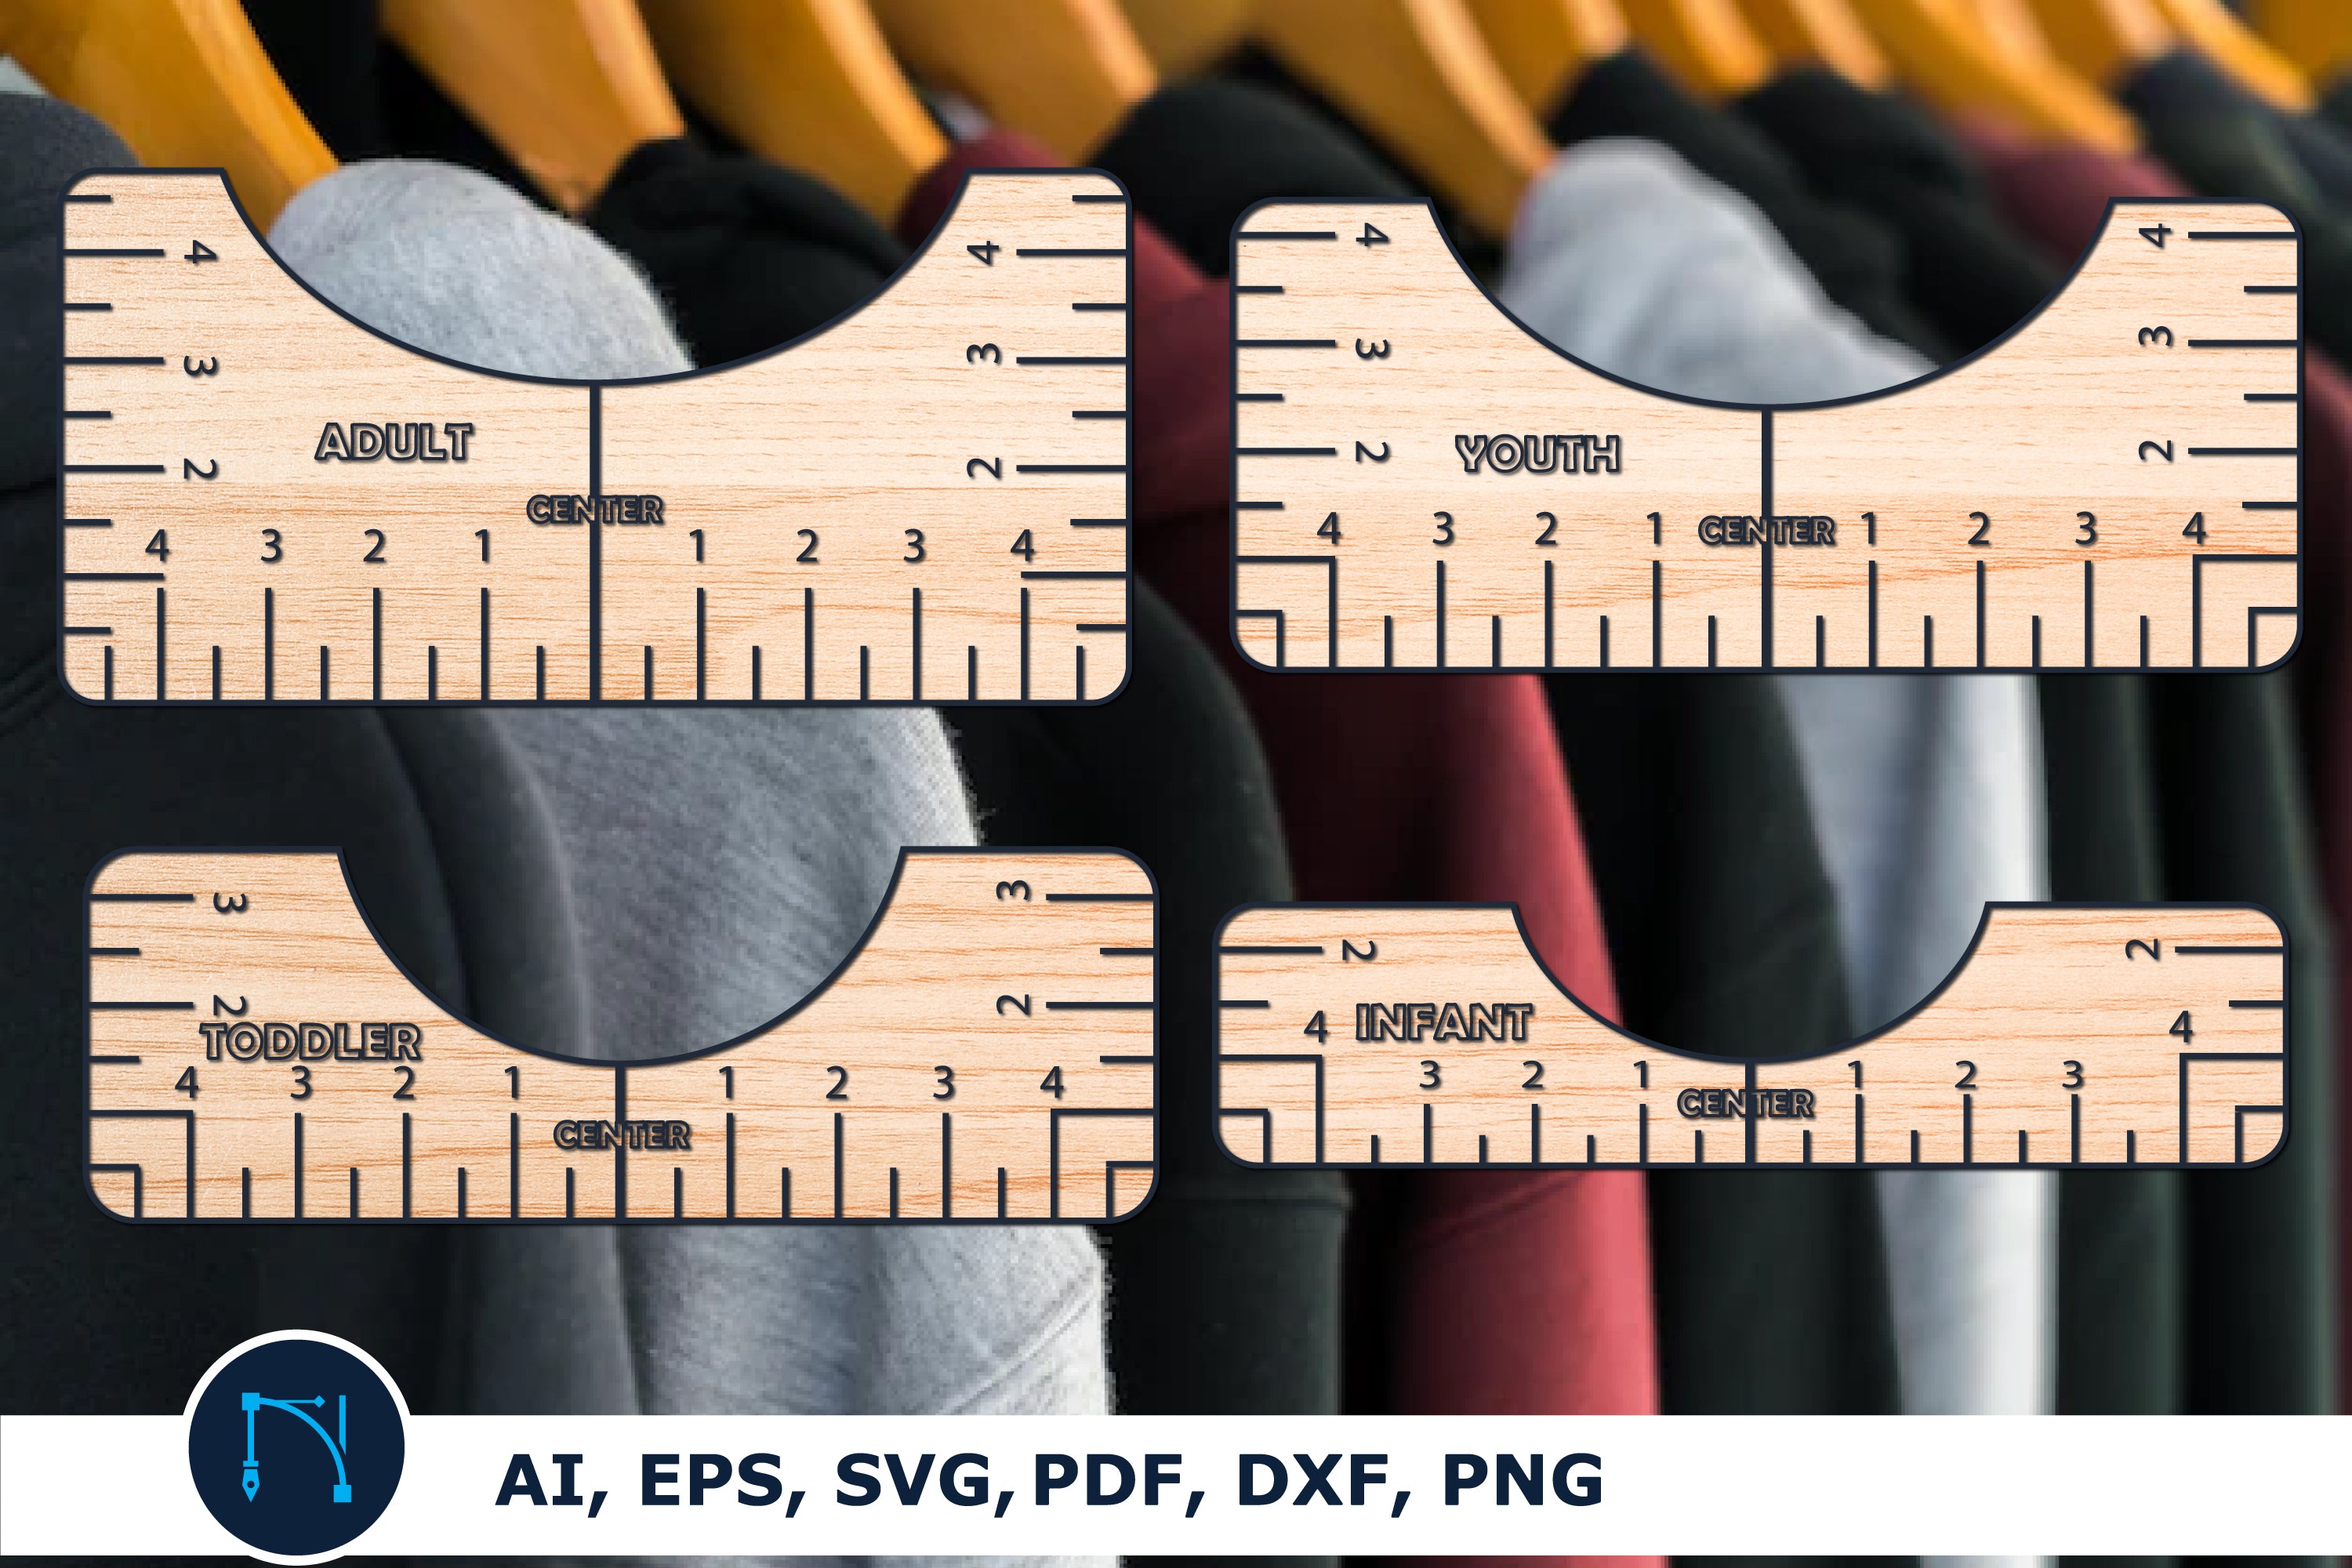 Tshirt Ruler SVG, T-shirt Alignment Tool - So Fontsy